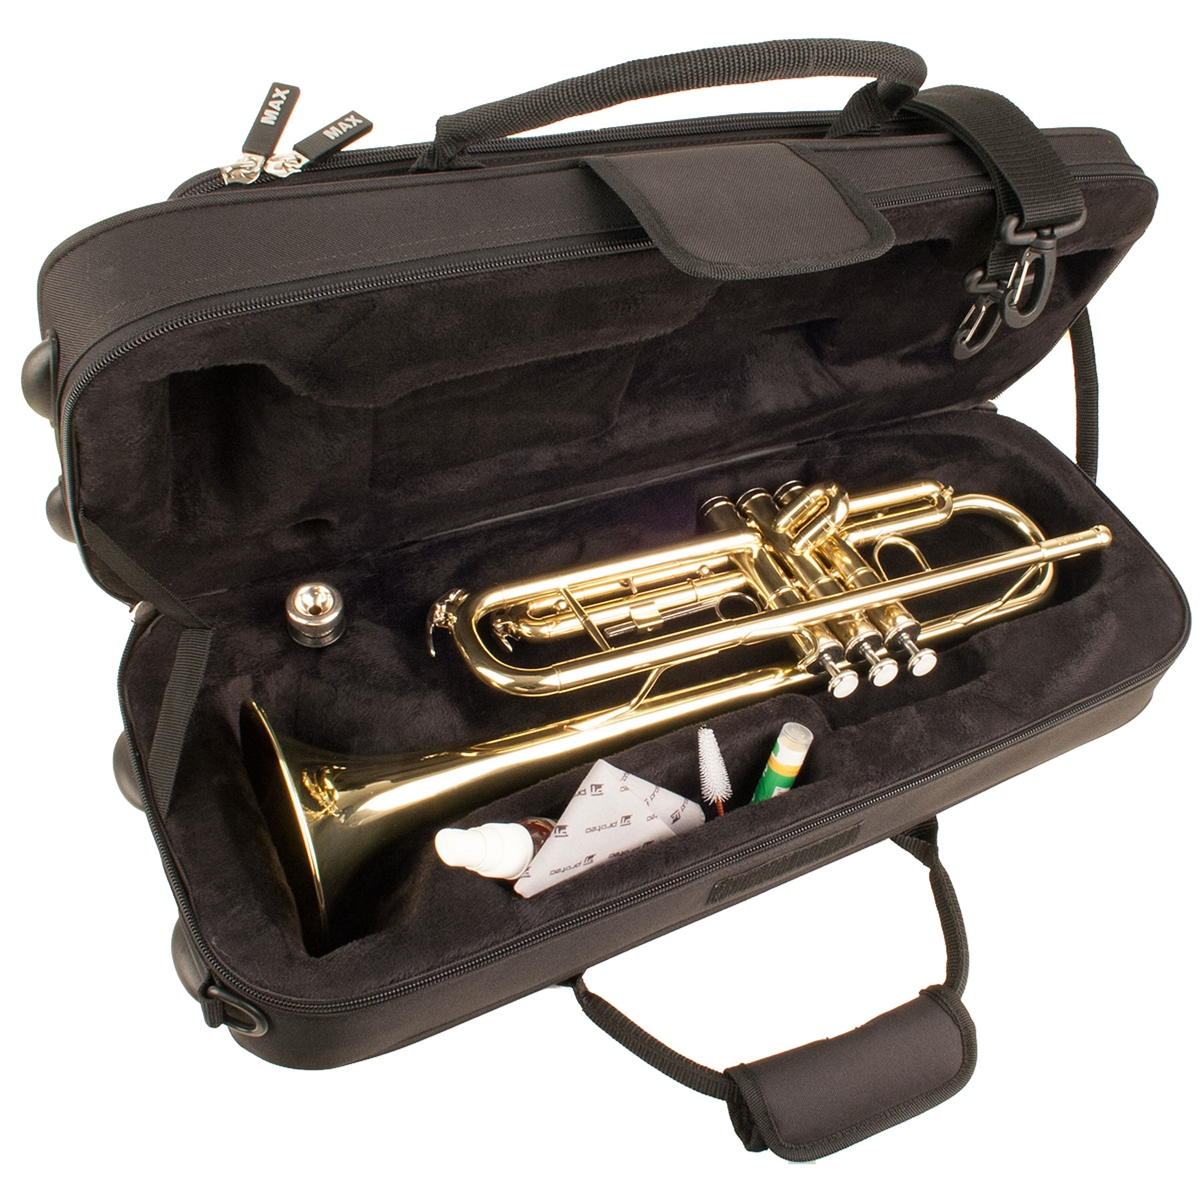 Protec MX301CT Case for Trumpet